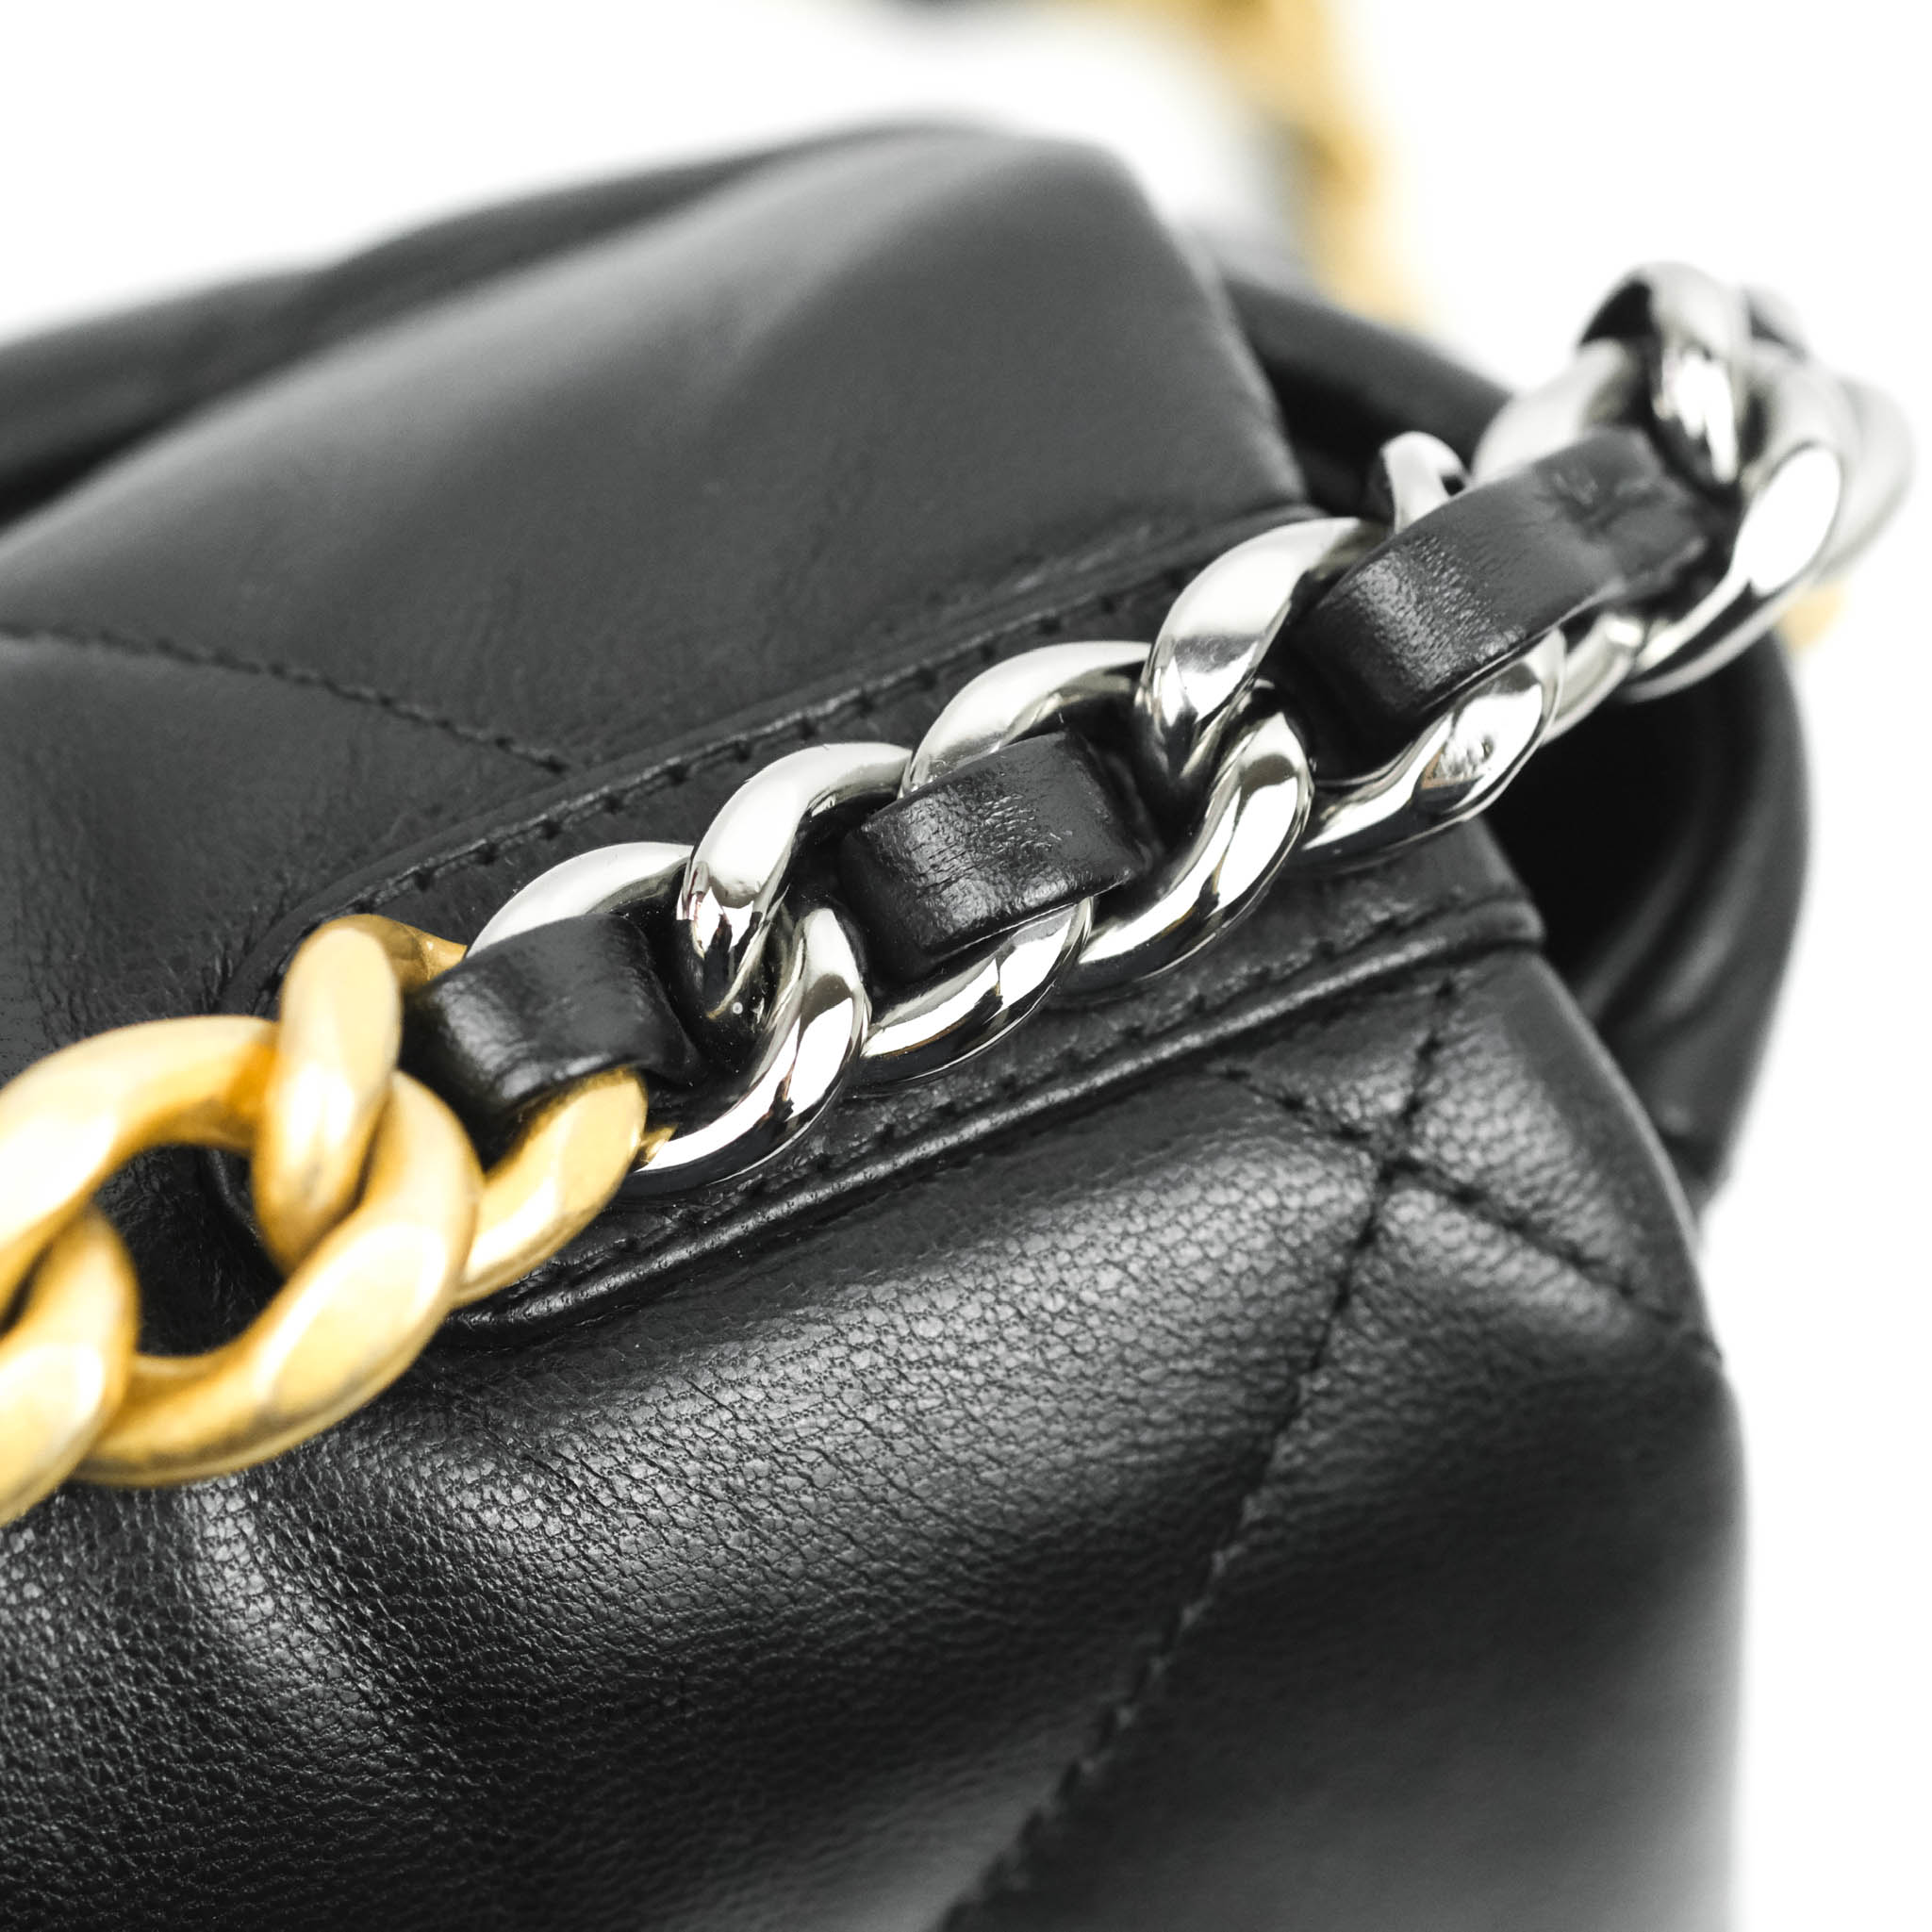 Chanel 19 size small #chanelbag #chanel19bag #chanel19 #luxuryhandbag